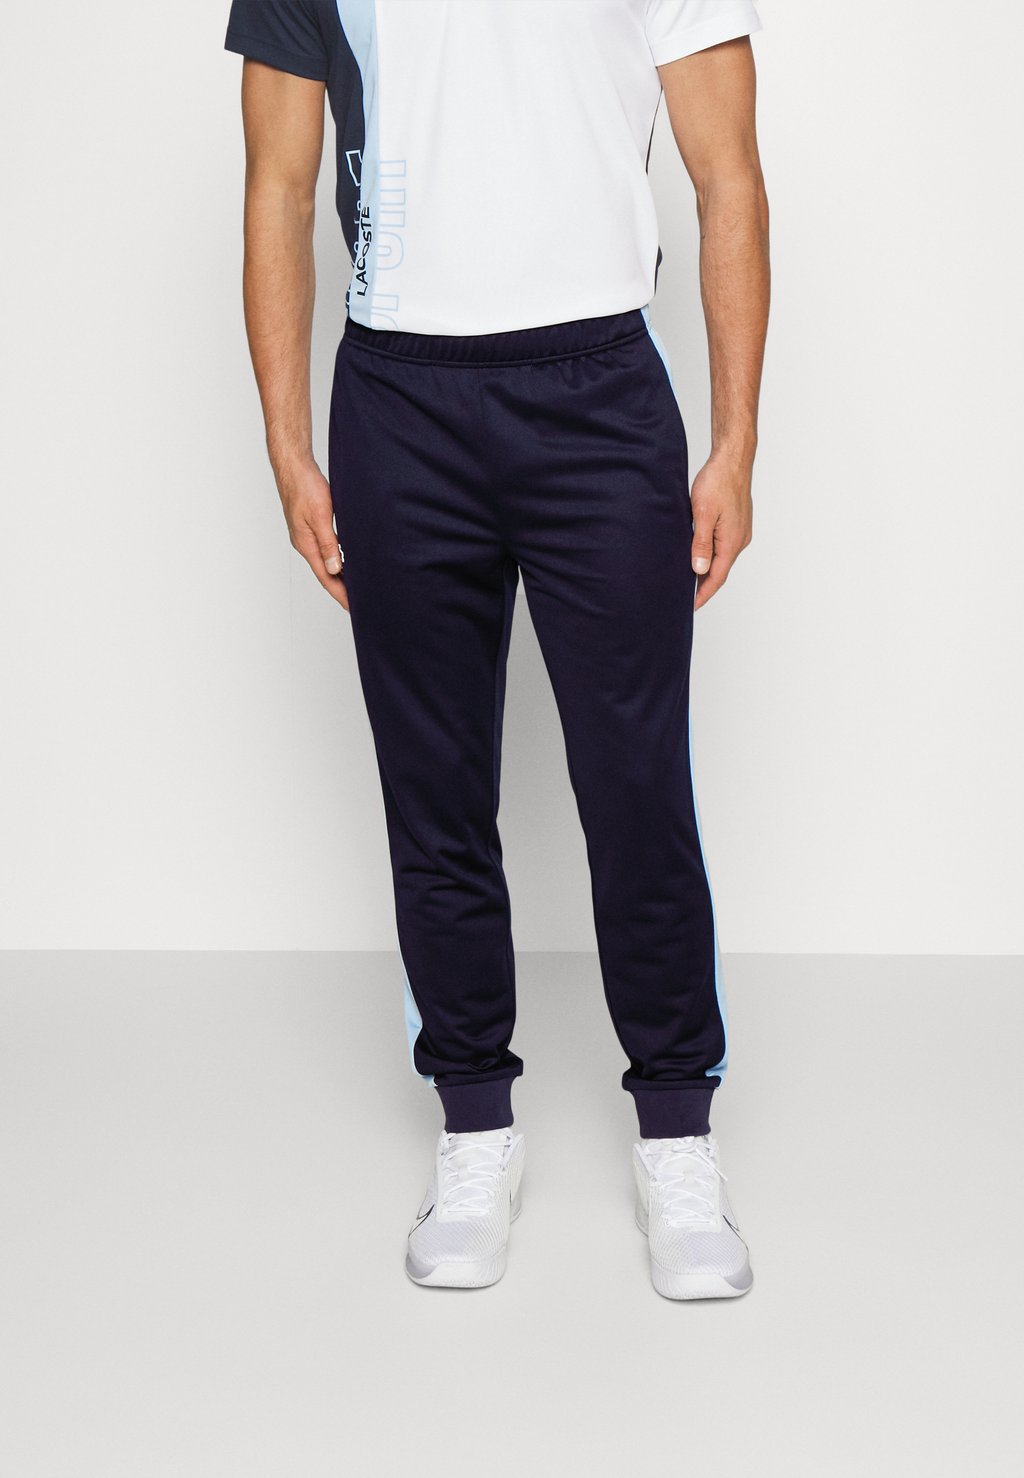 Спортивные брюки Tennis Pant Lacoste, цвет navy blue/overview спортивные шорты tennis lacoste цвет white navy blue